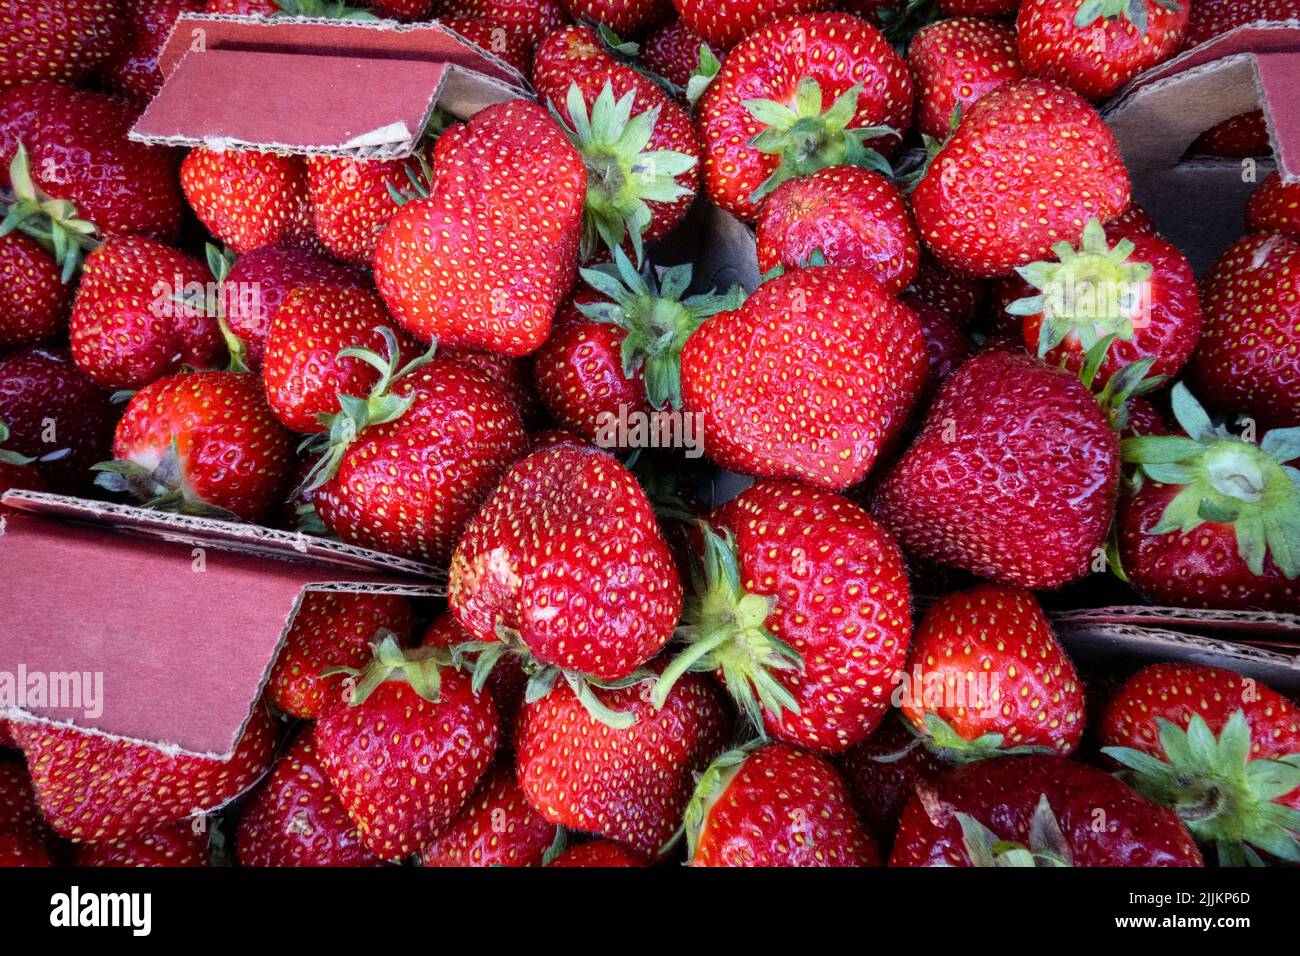 Farm fresh strawberries at the food market Stock Photo